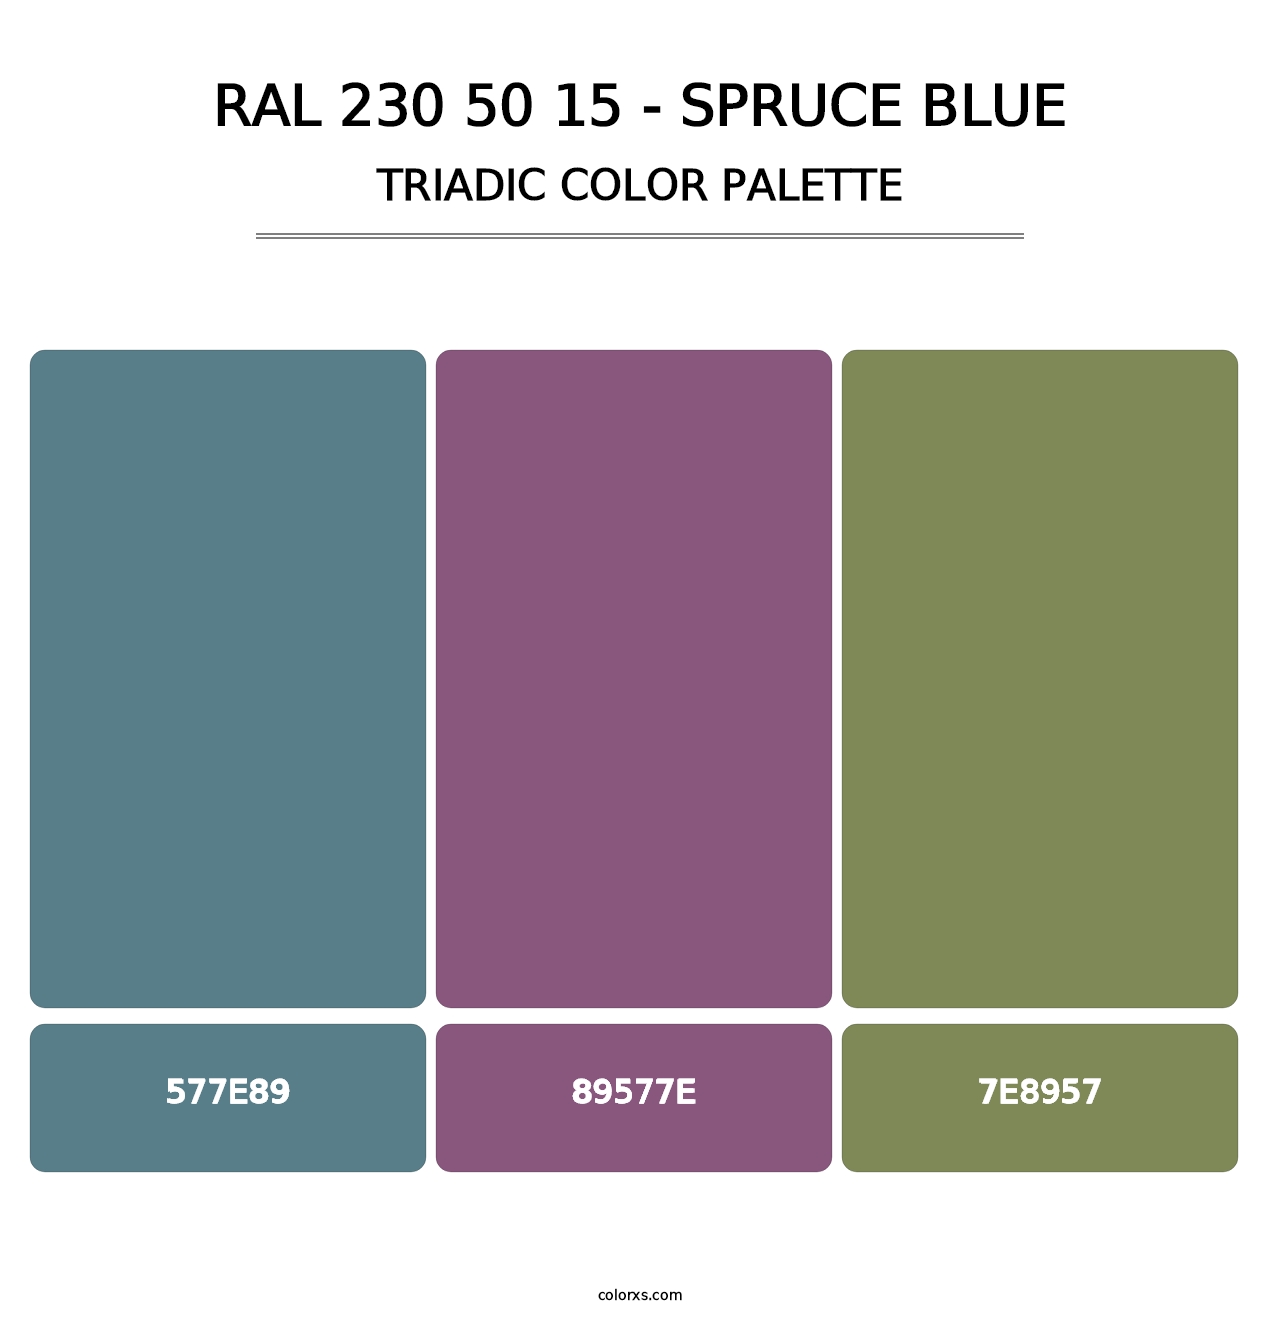 RAL 230 50 15 - Spruce Blue - Triadic Color Palette